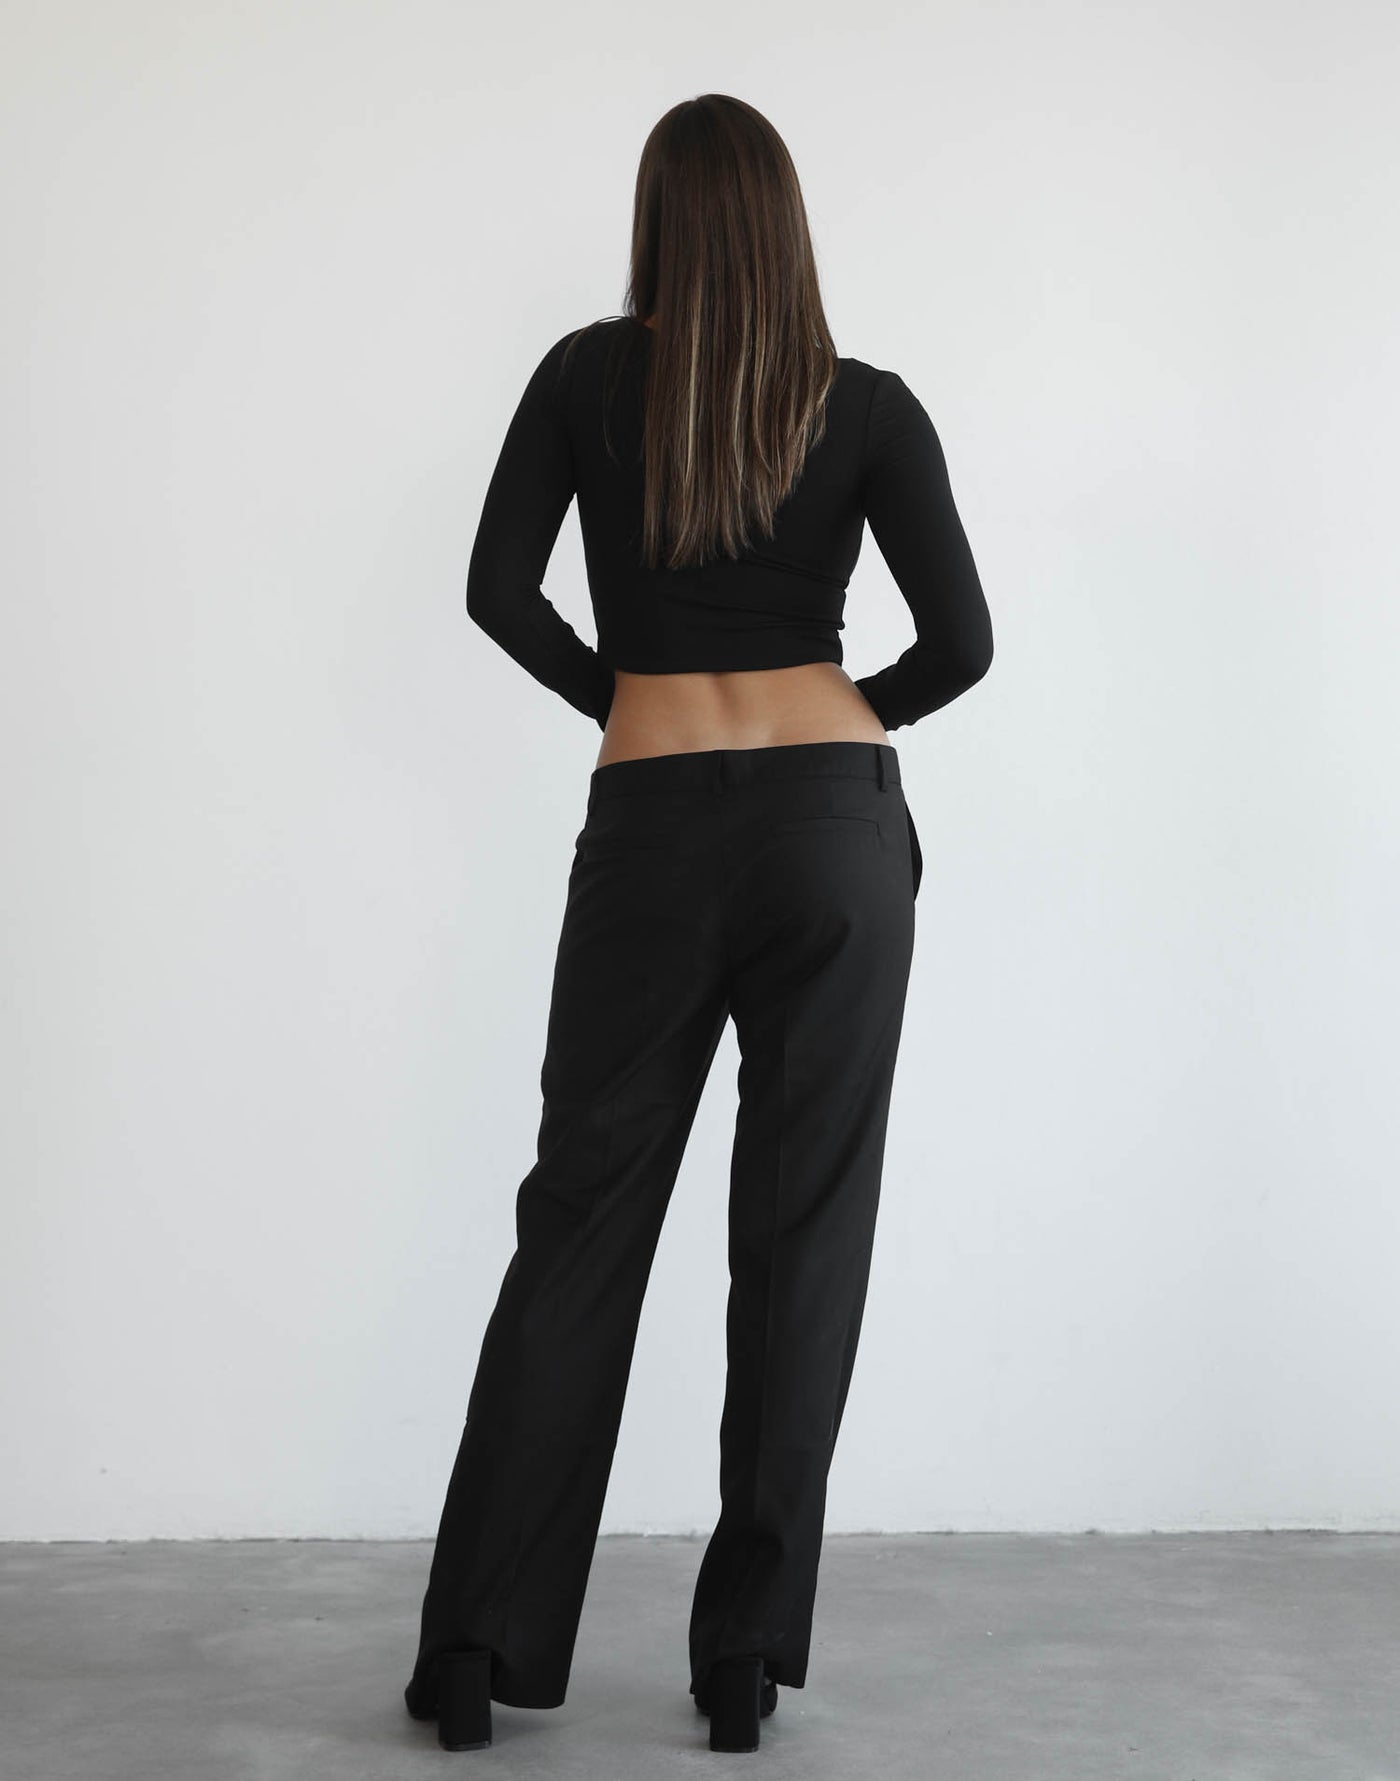 Mendes Long Sleeve Crop Top (Black) - Long Sleeve Crop Top - Women's Top - Charcoal Clothing